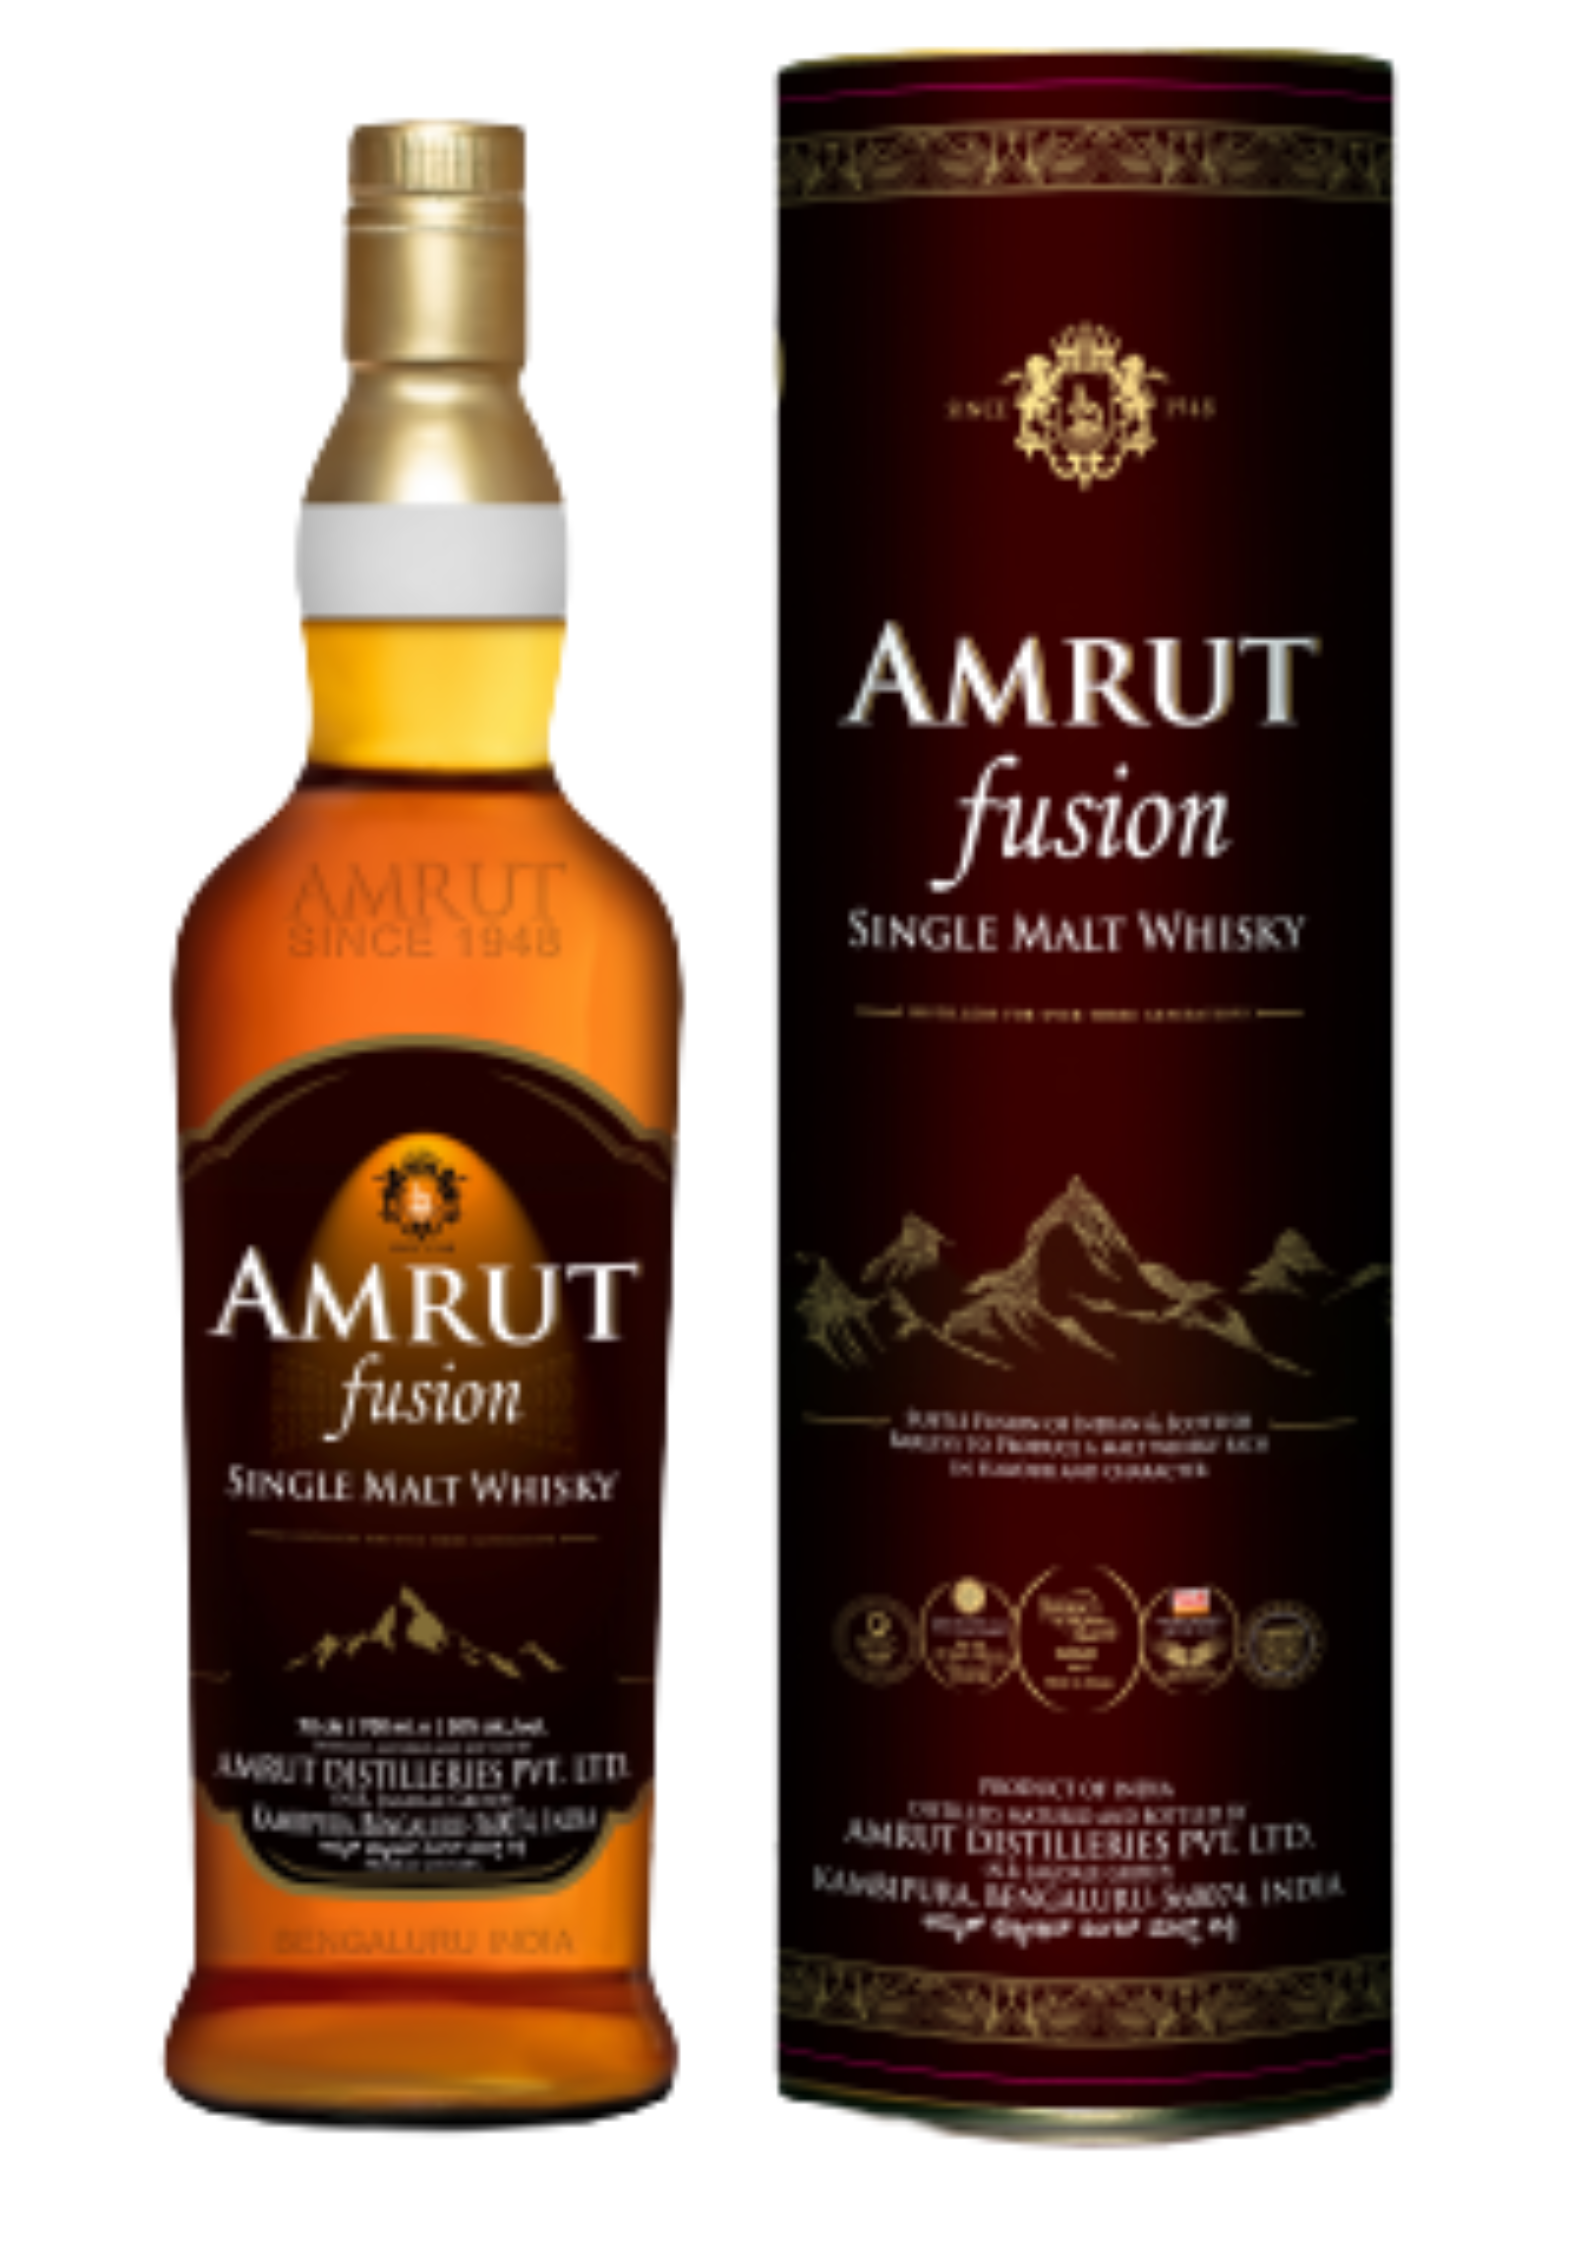 Bottle of Amrut Fusion Indian Single Malt Whisky, 50% - The Spirits Room